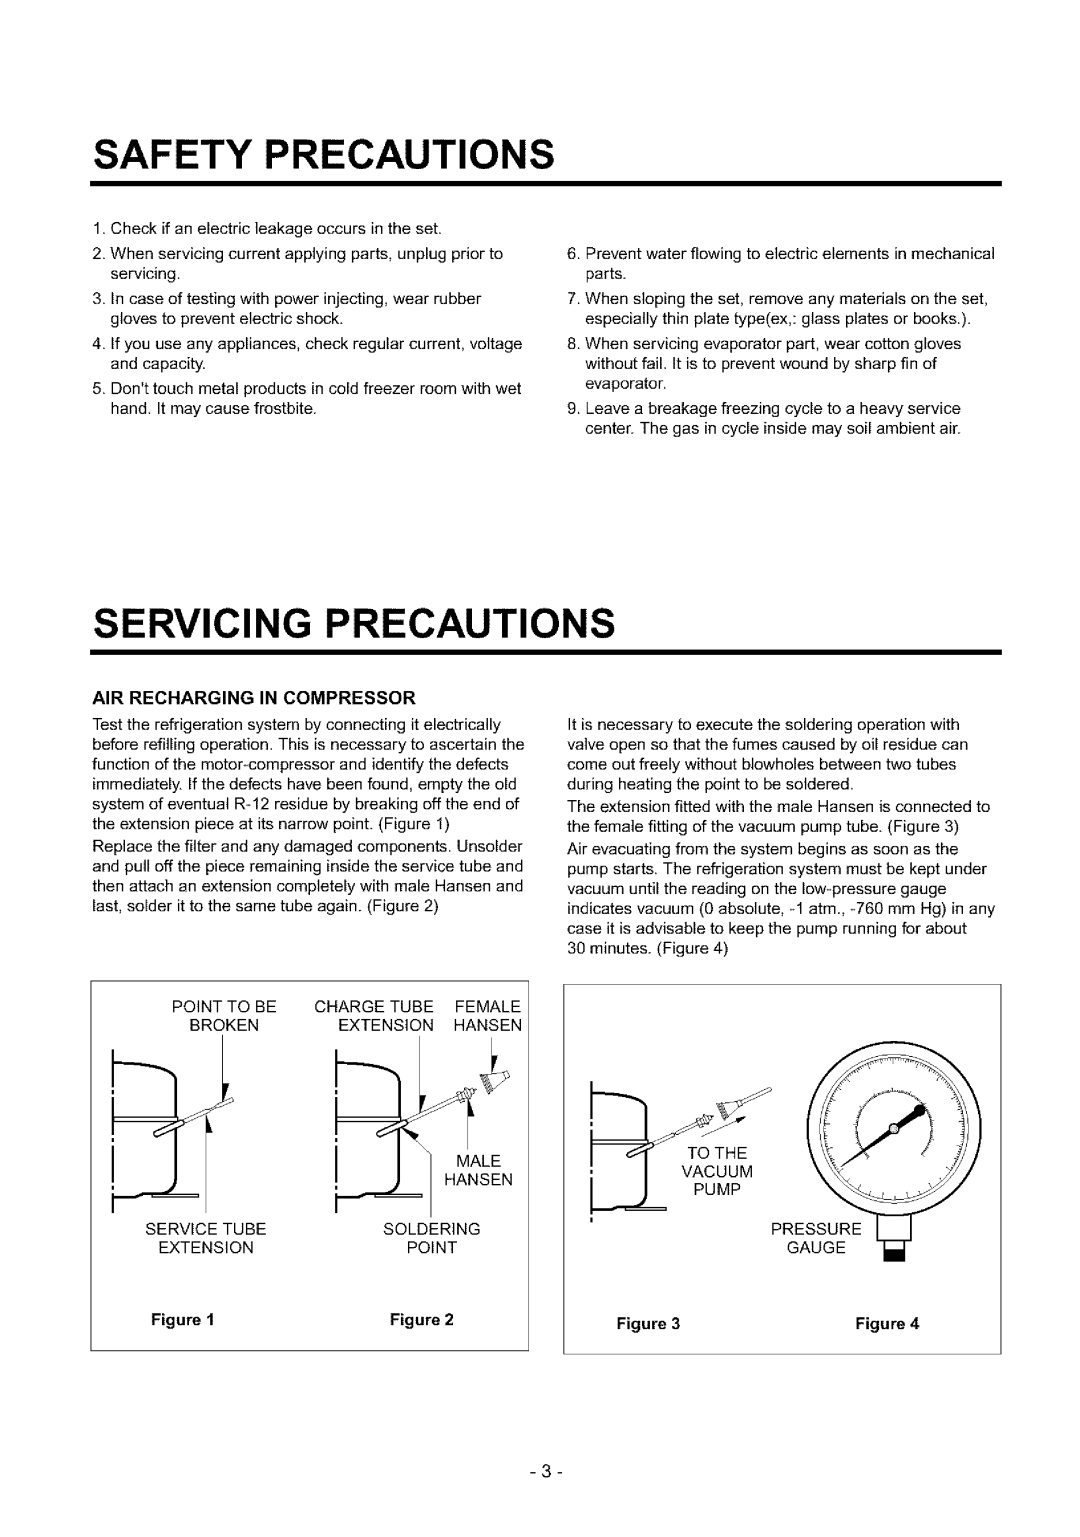 Sears GR-151SF, GR-151SPF, GR-131SF, GR-051SF manual Safety Precautions, Servicing Precautions, Air Recharging In Compressor 